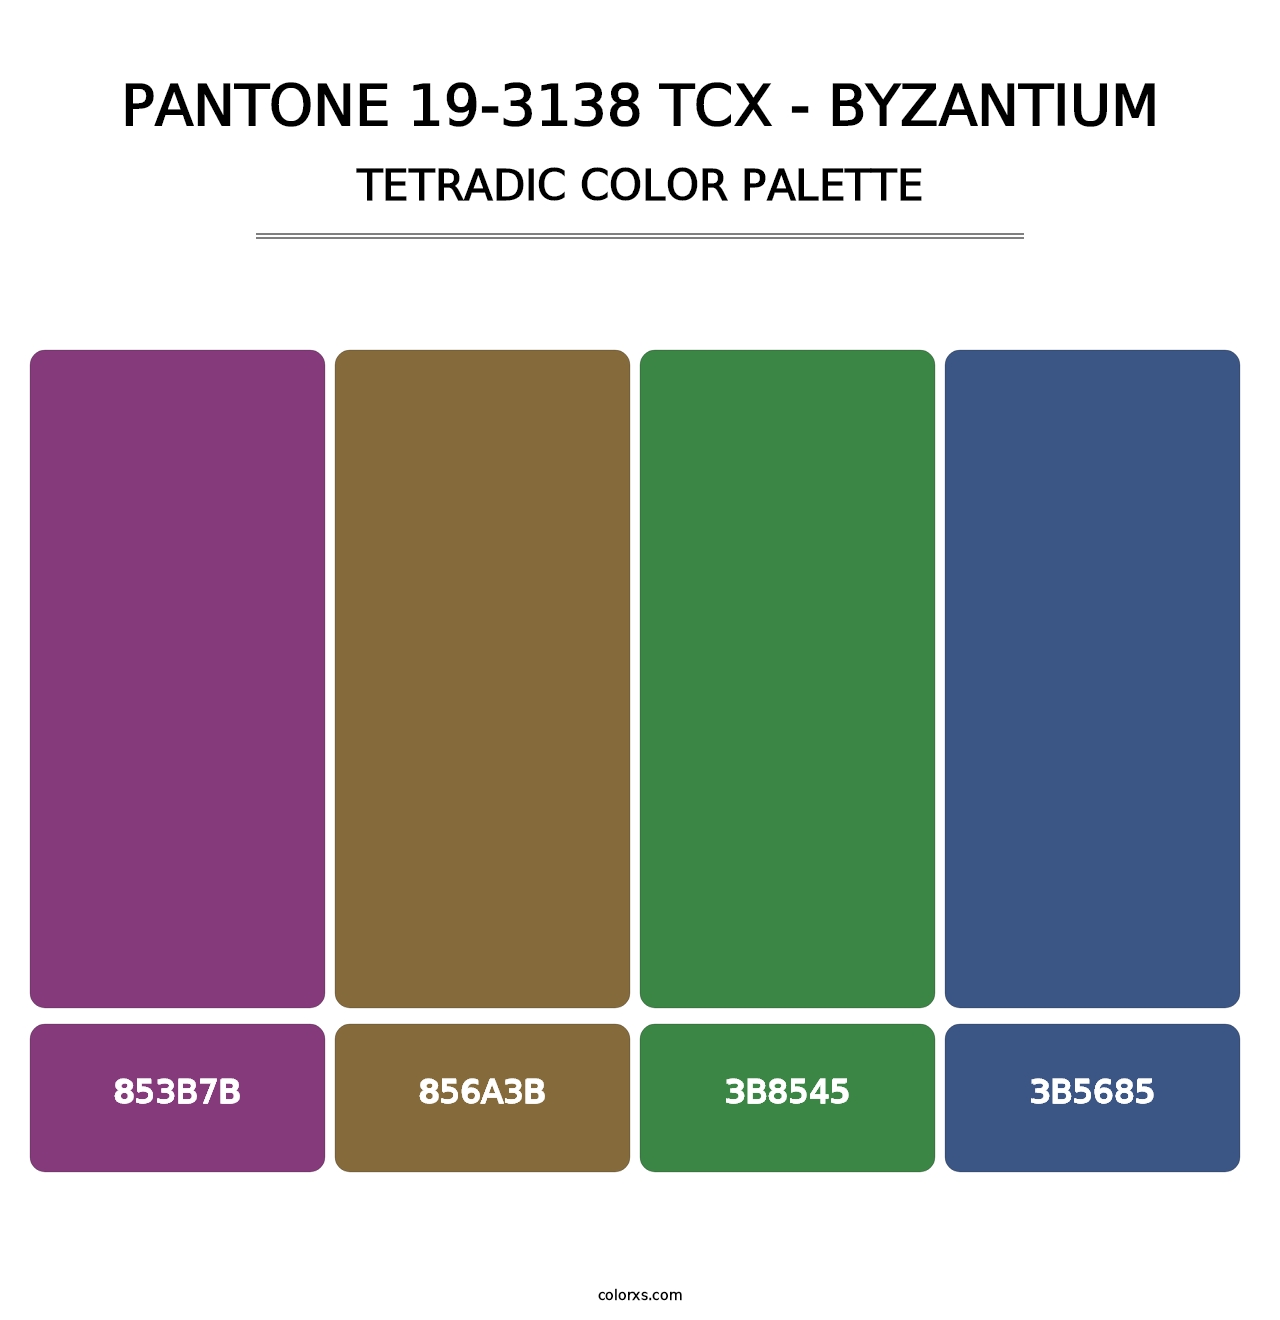 PANTONE 19-3138 TCX - Byzantium - Tetradic Color Palette